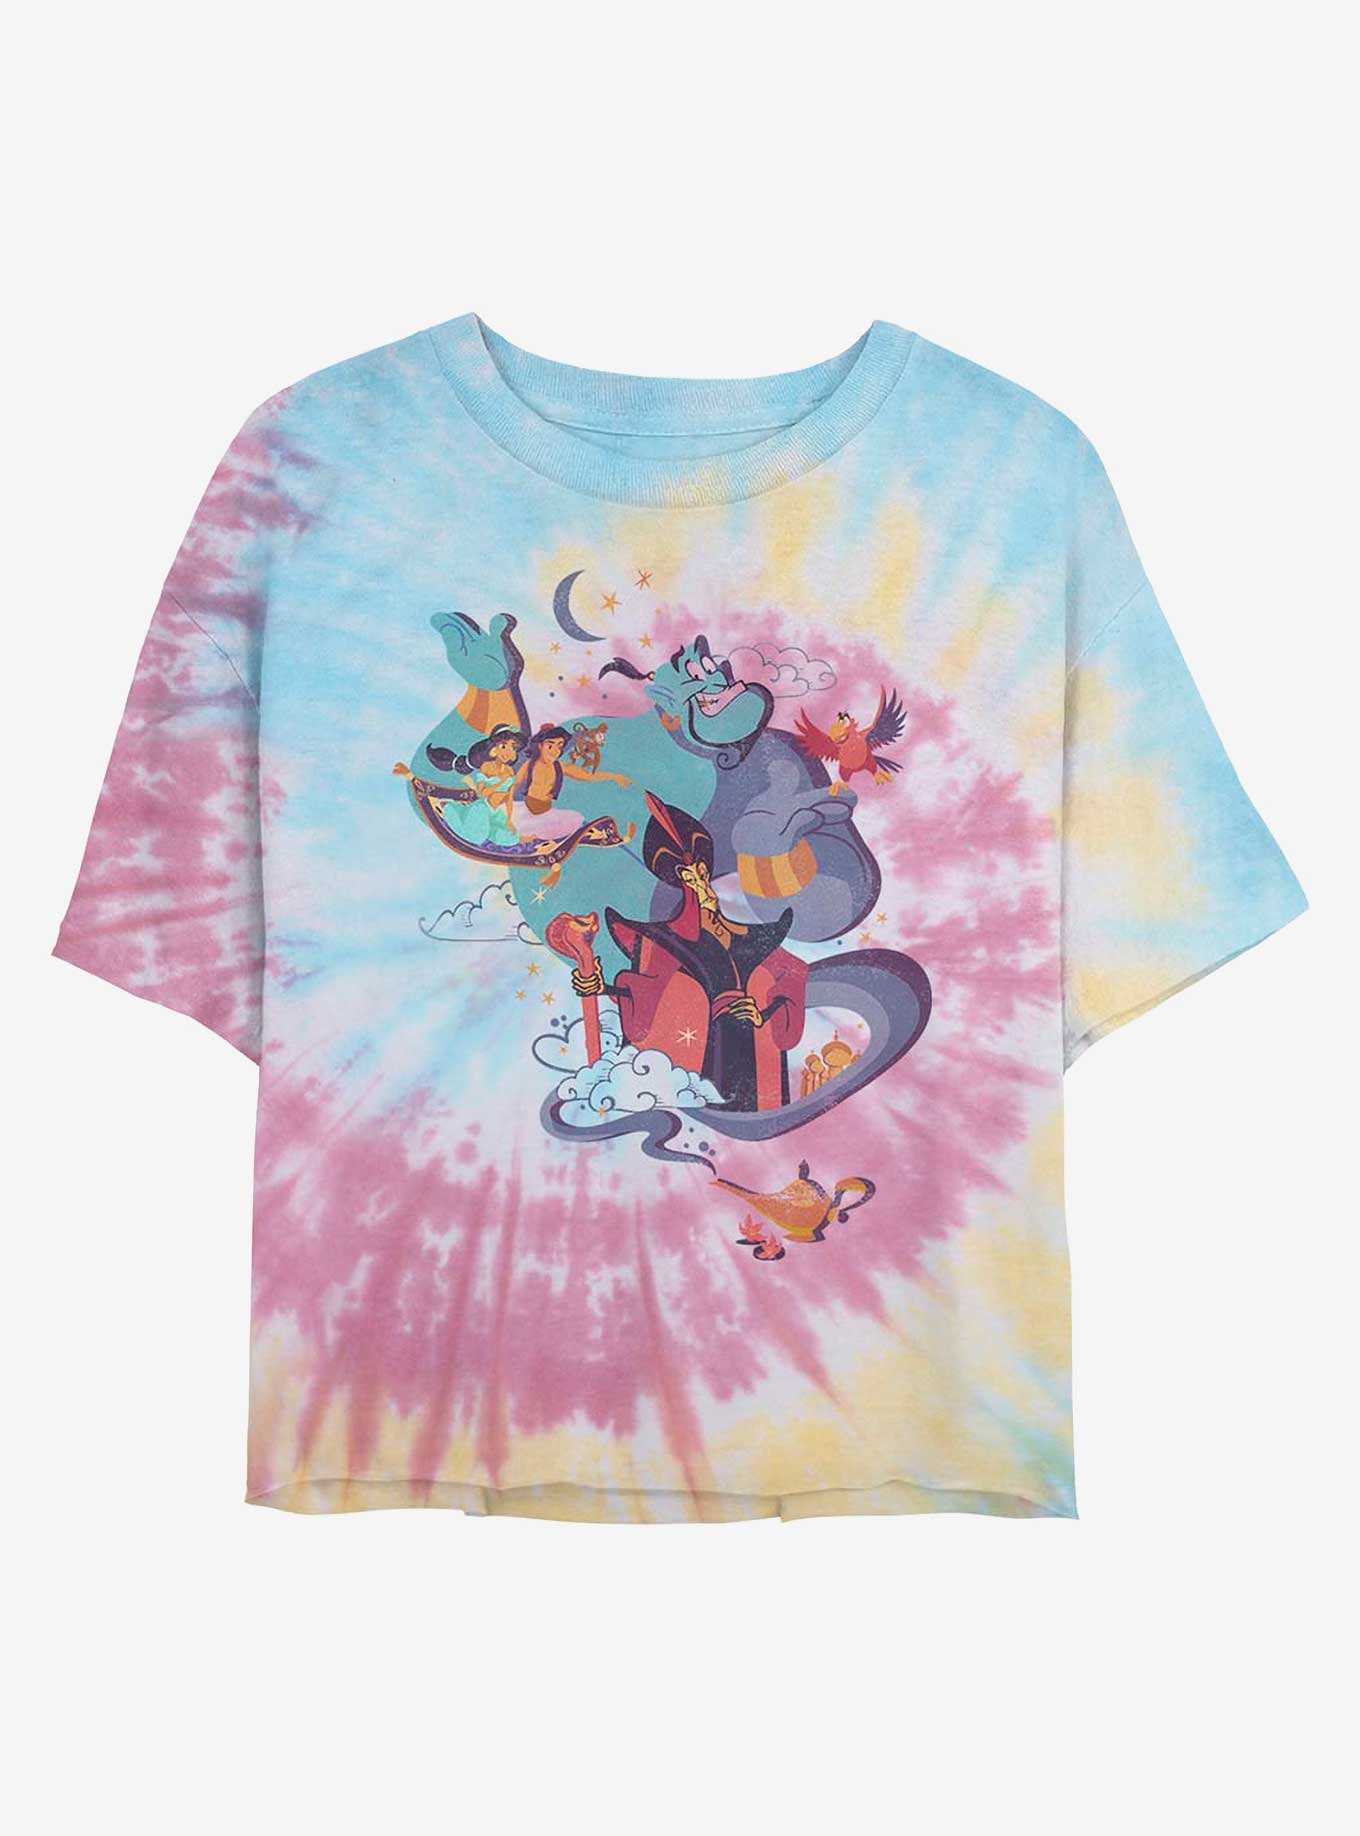 Disney Aladdin Vintage Poster Tie Dye Crop Girls T-Shirt, , hi-res